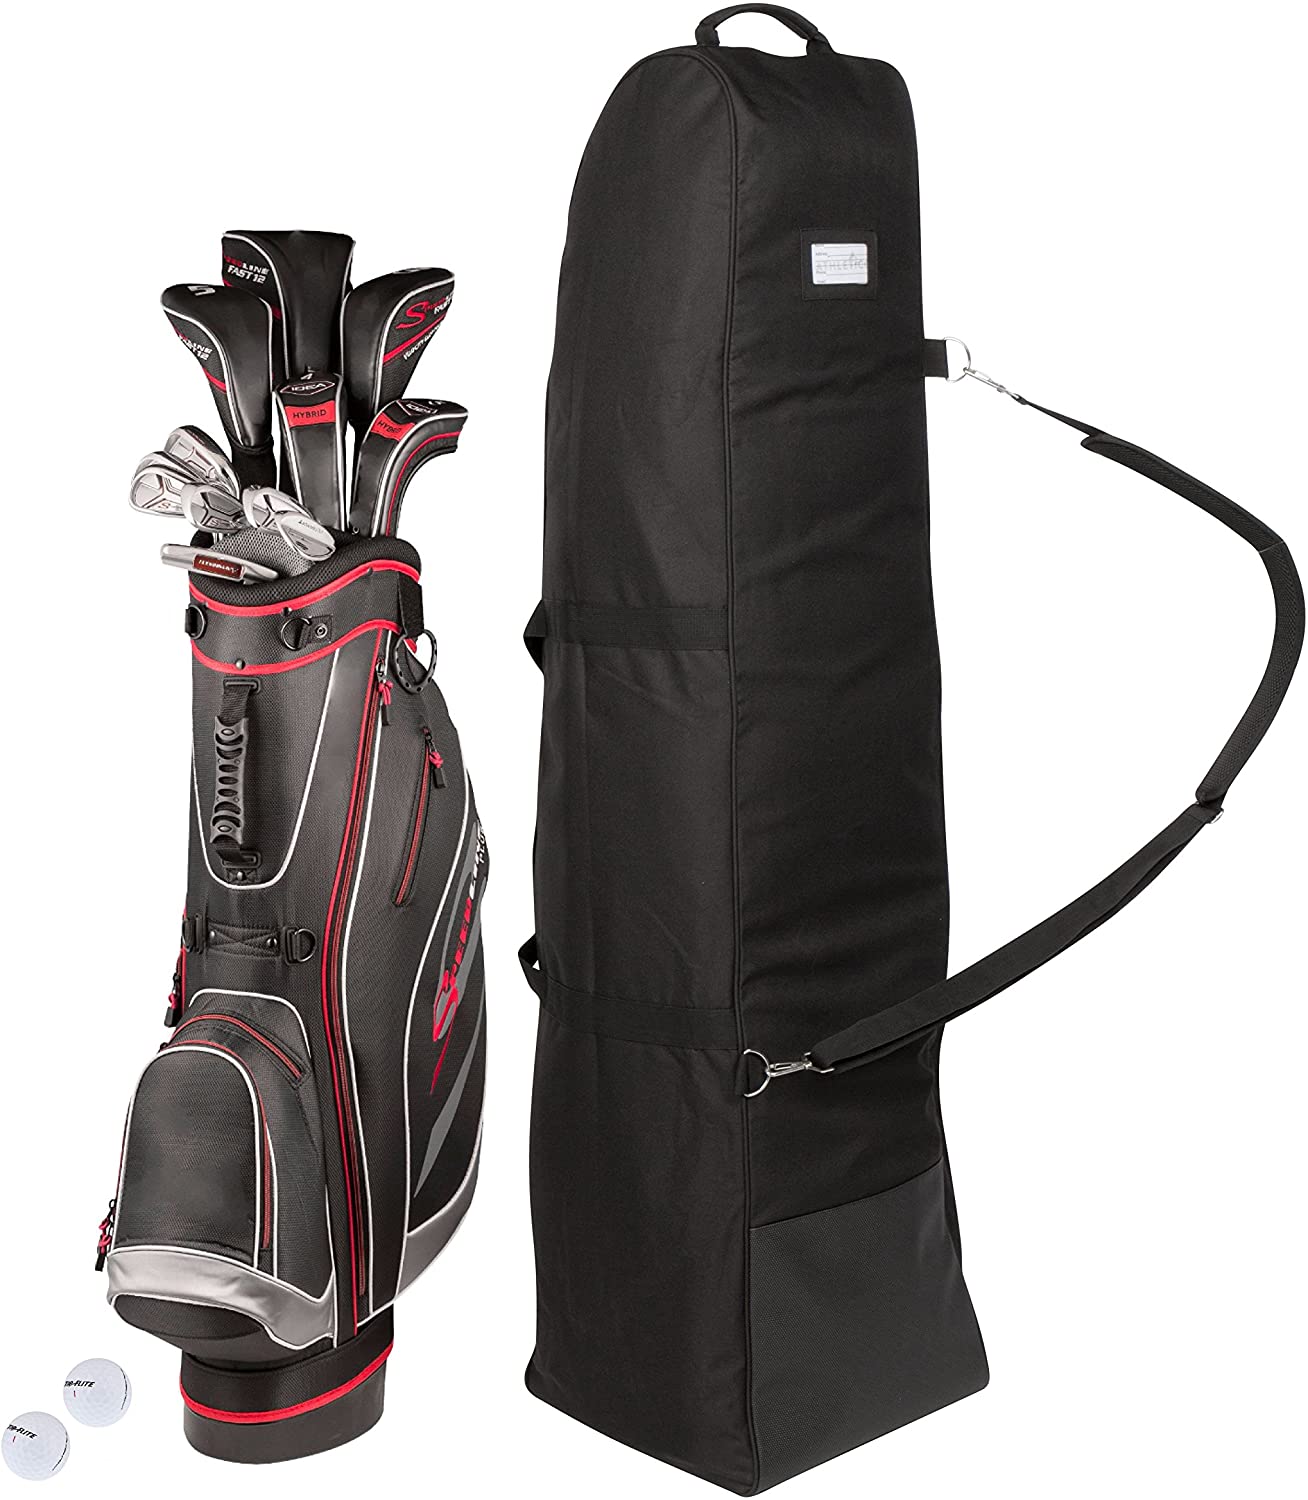 Athletico Padded Golf Travel Bag